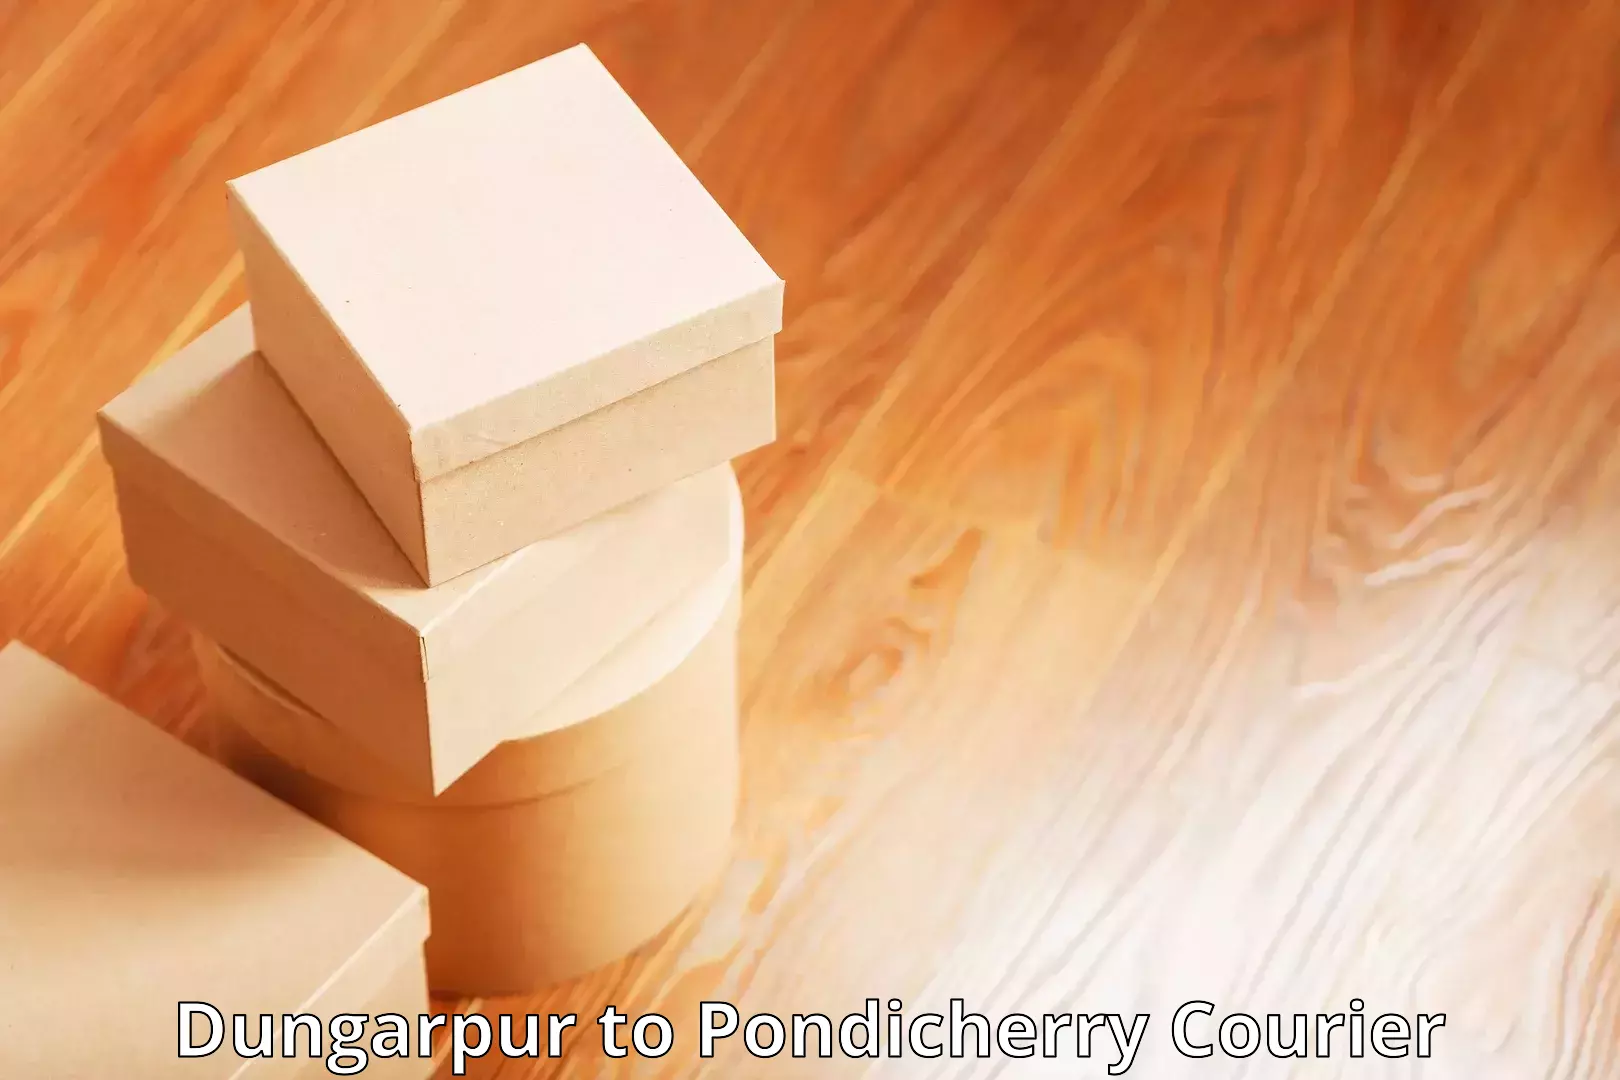 Cash on delivery service Dungarpur to Pondicherry University